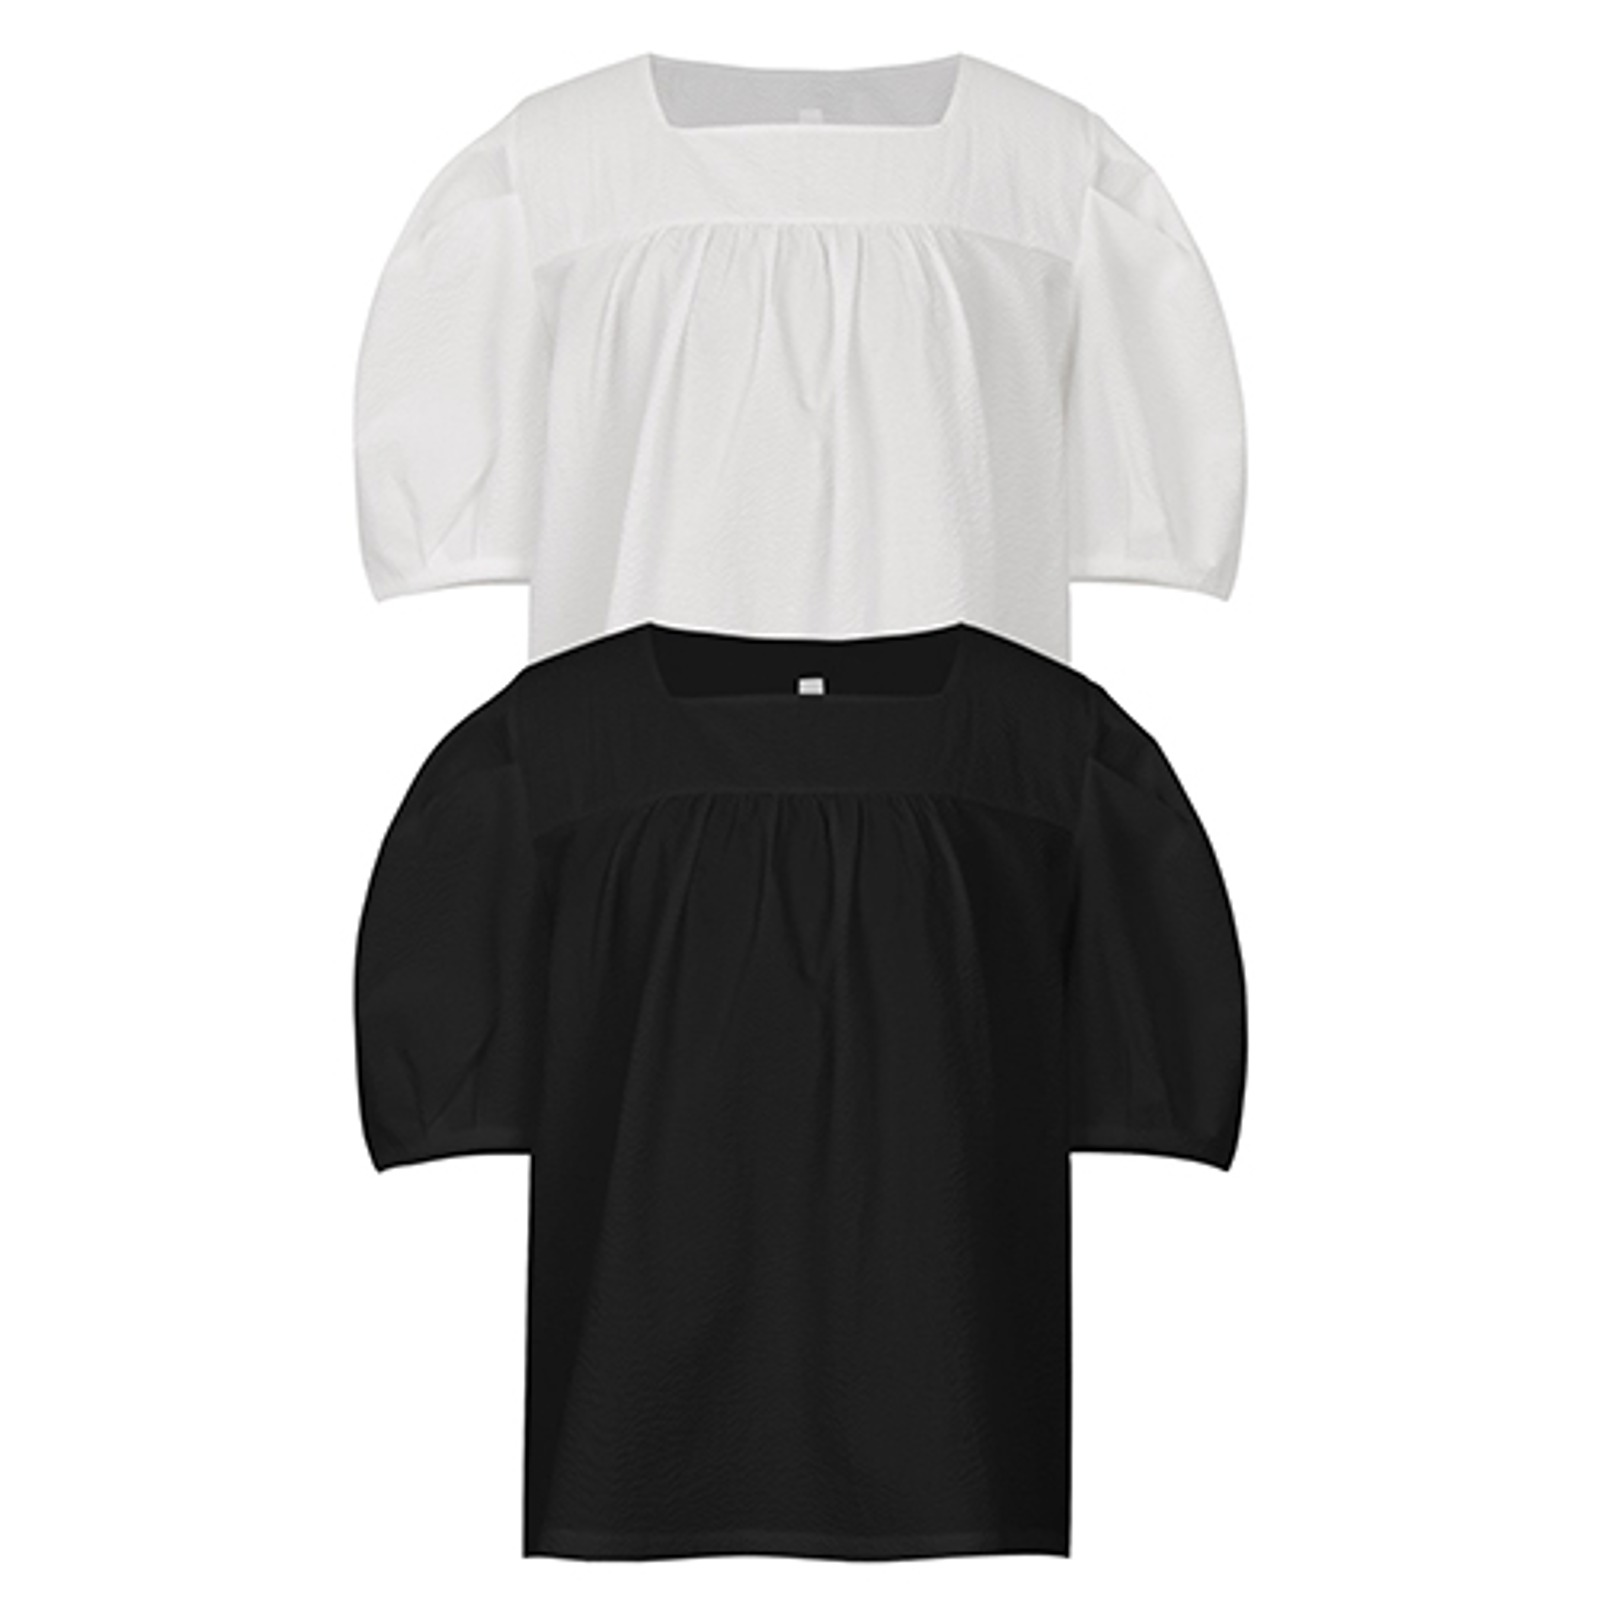 W. Embo blouse Black/White [ 45,000-&gt;25,000 5/2 11:00~5/4 ]